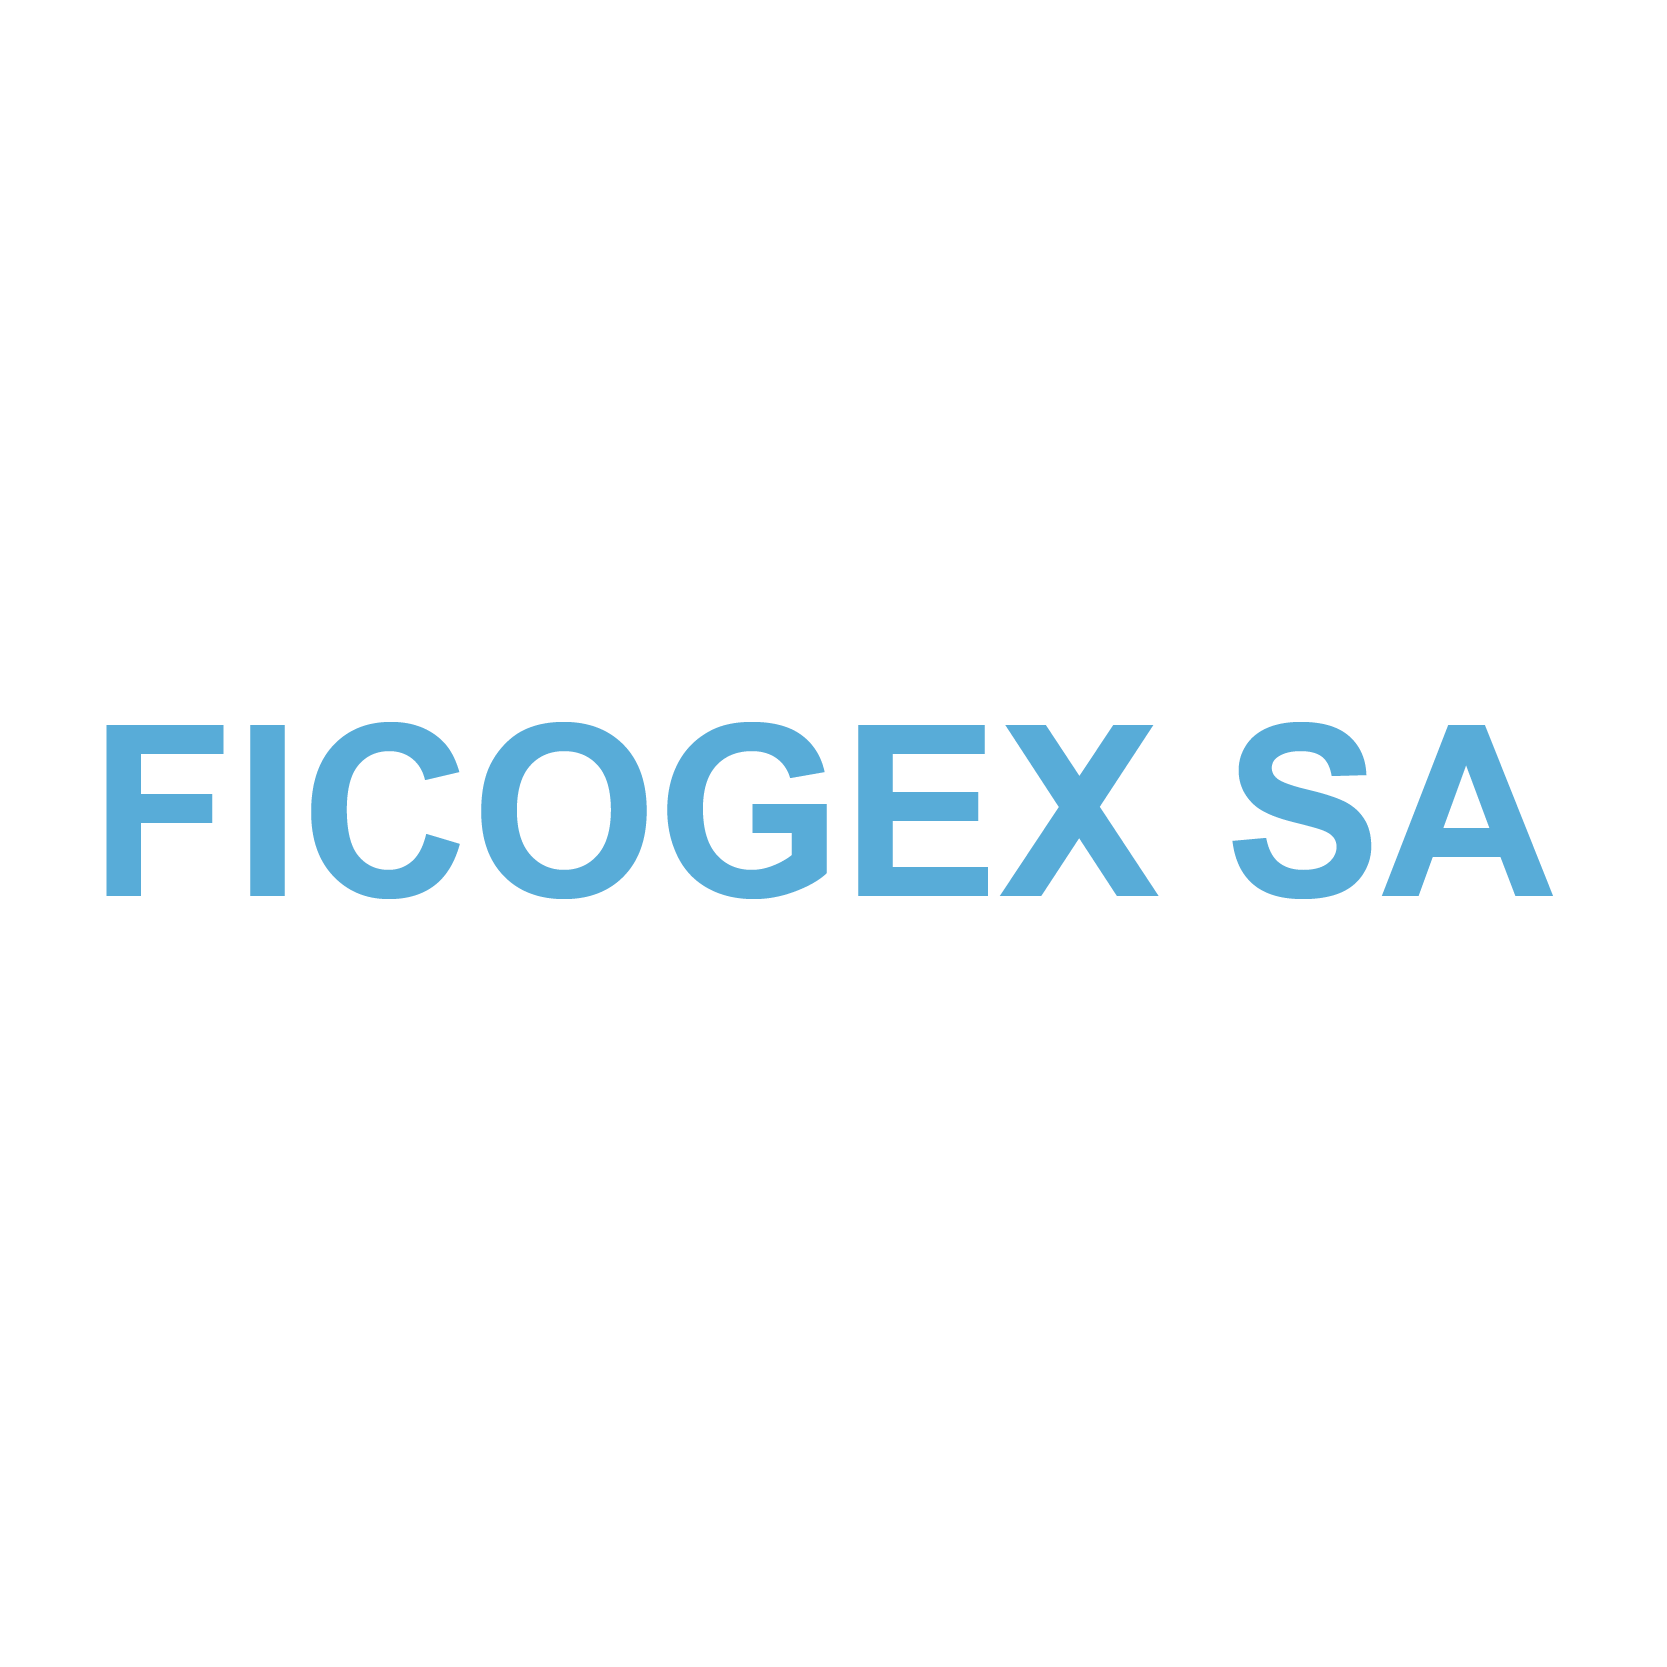 Cabinet-Ficogex-Expert-Comptable